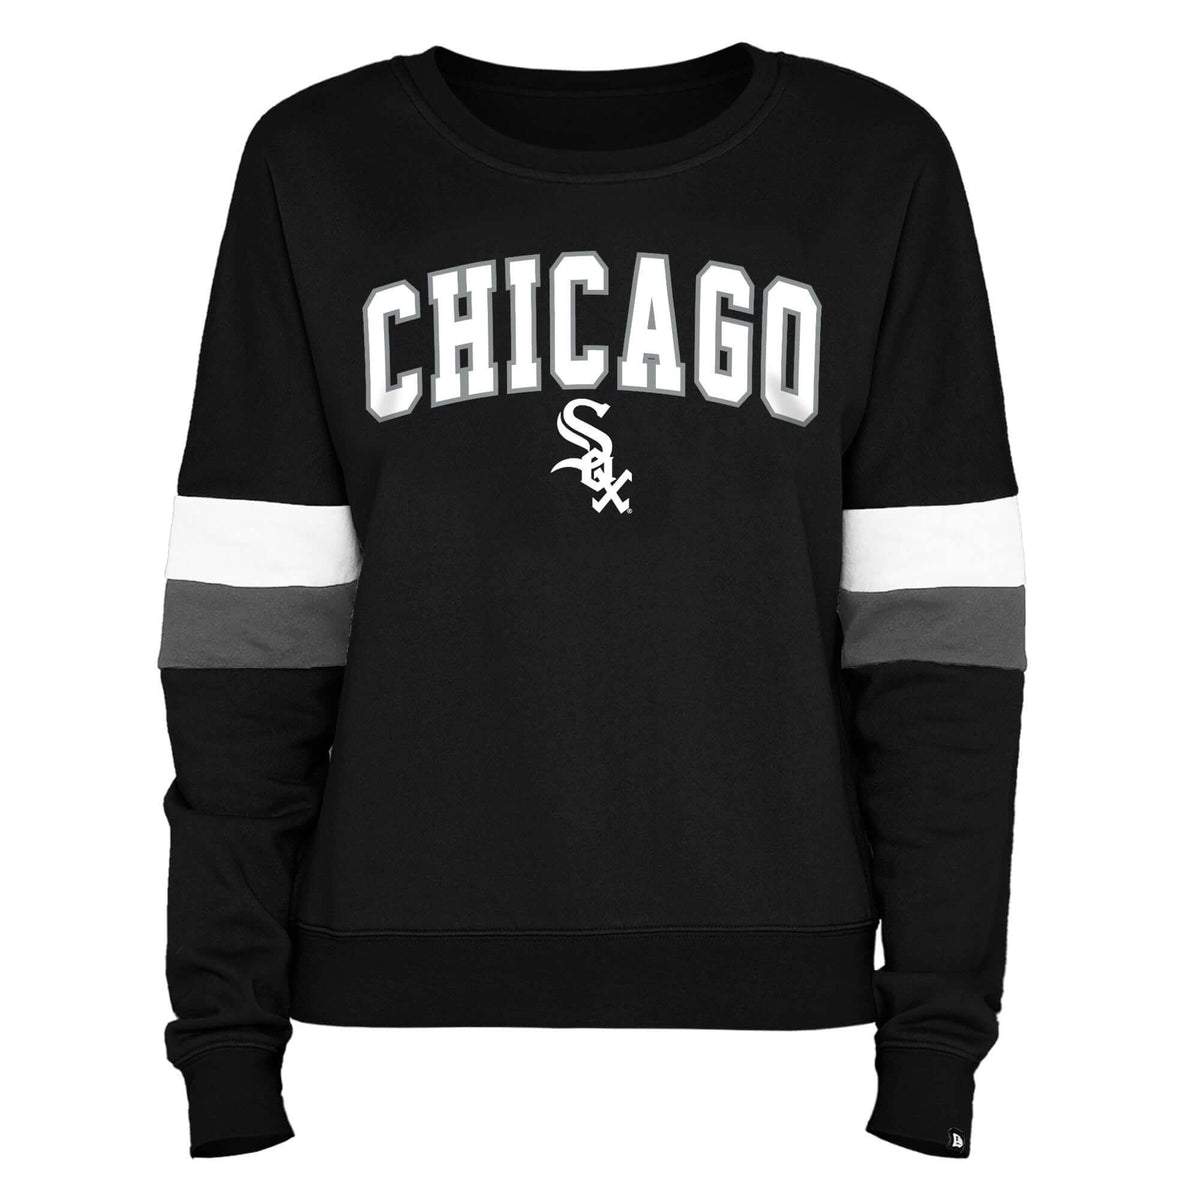 Chicago Sox New Era Women's Sweatshirt Pullover -Black XL